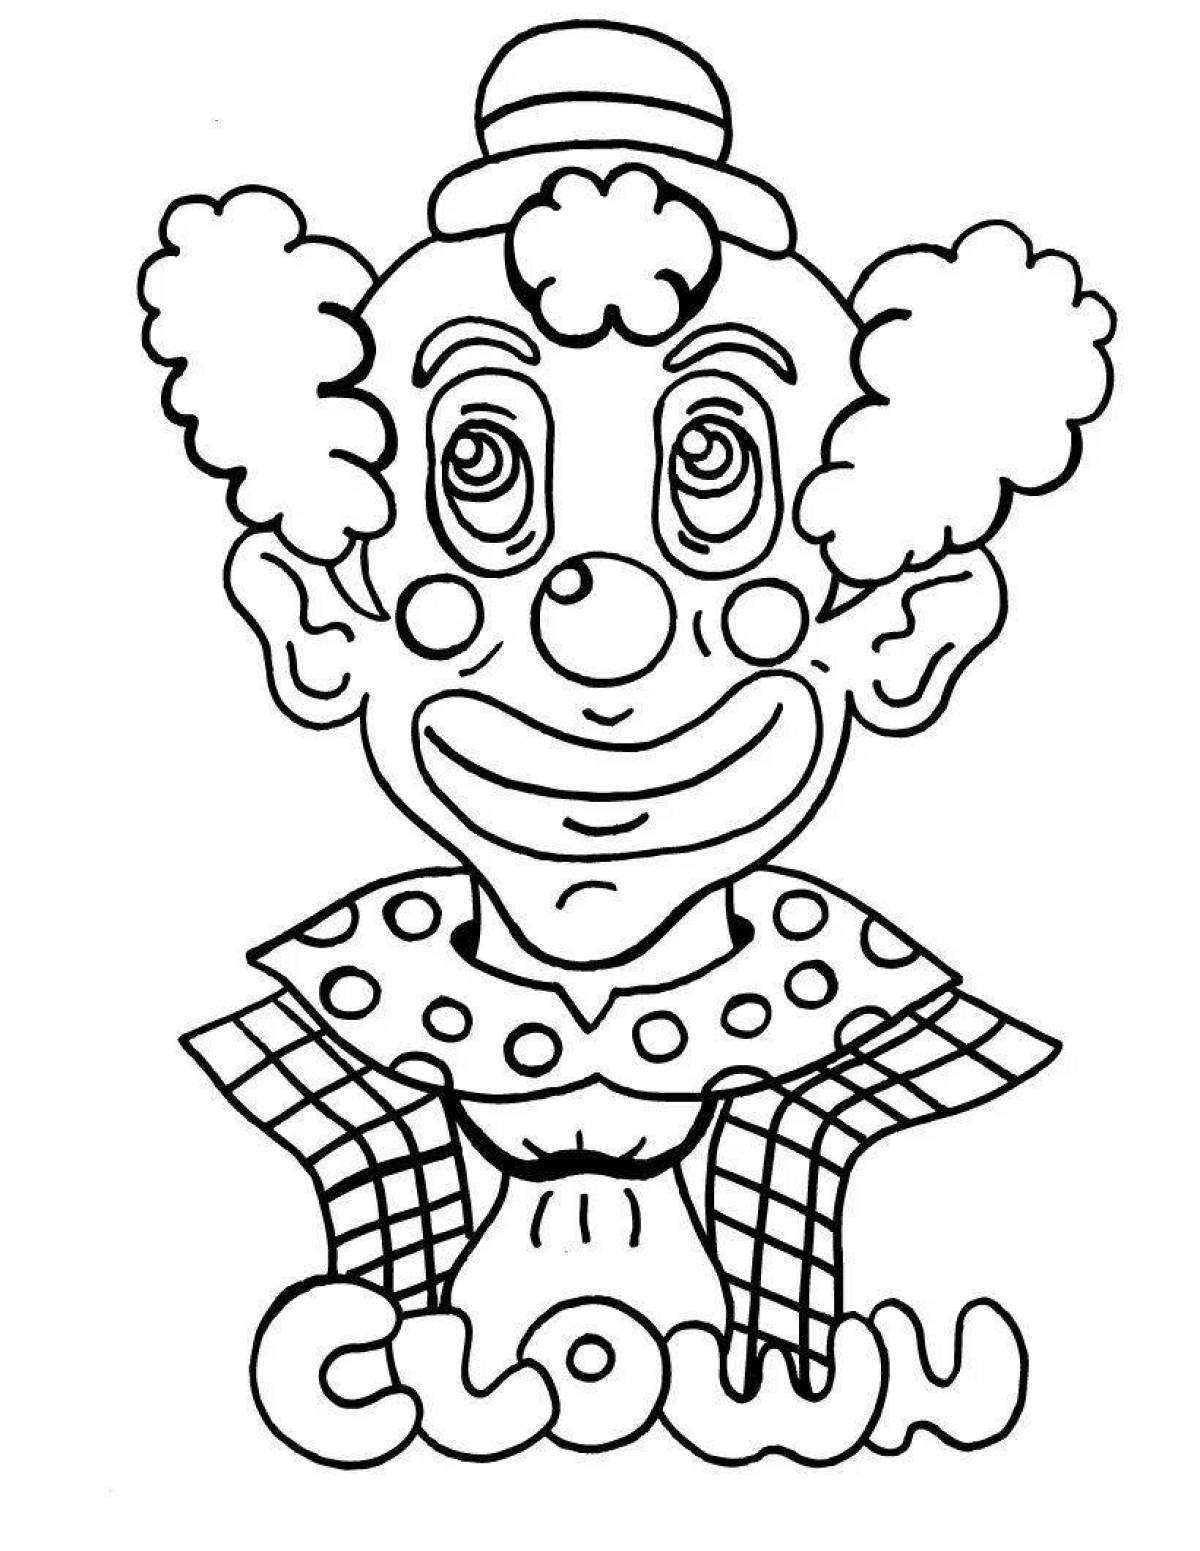 Playful clown drawing